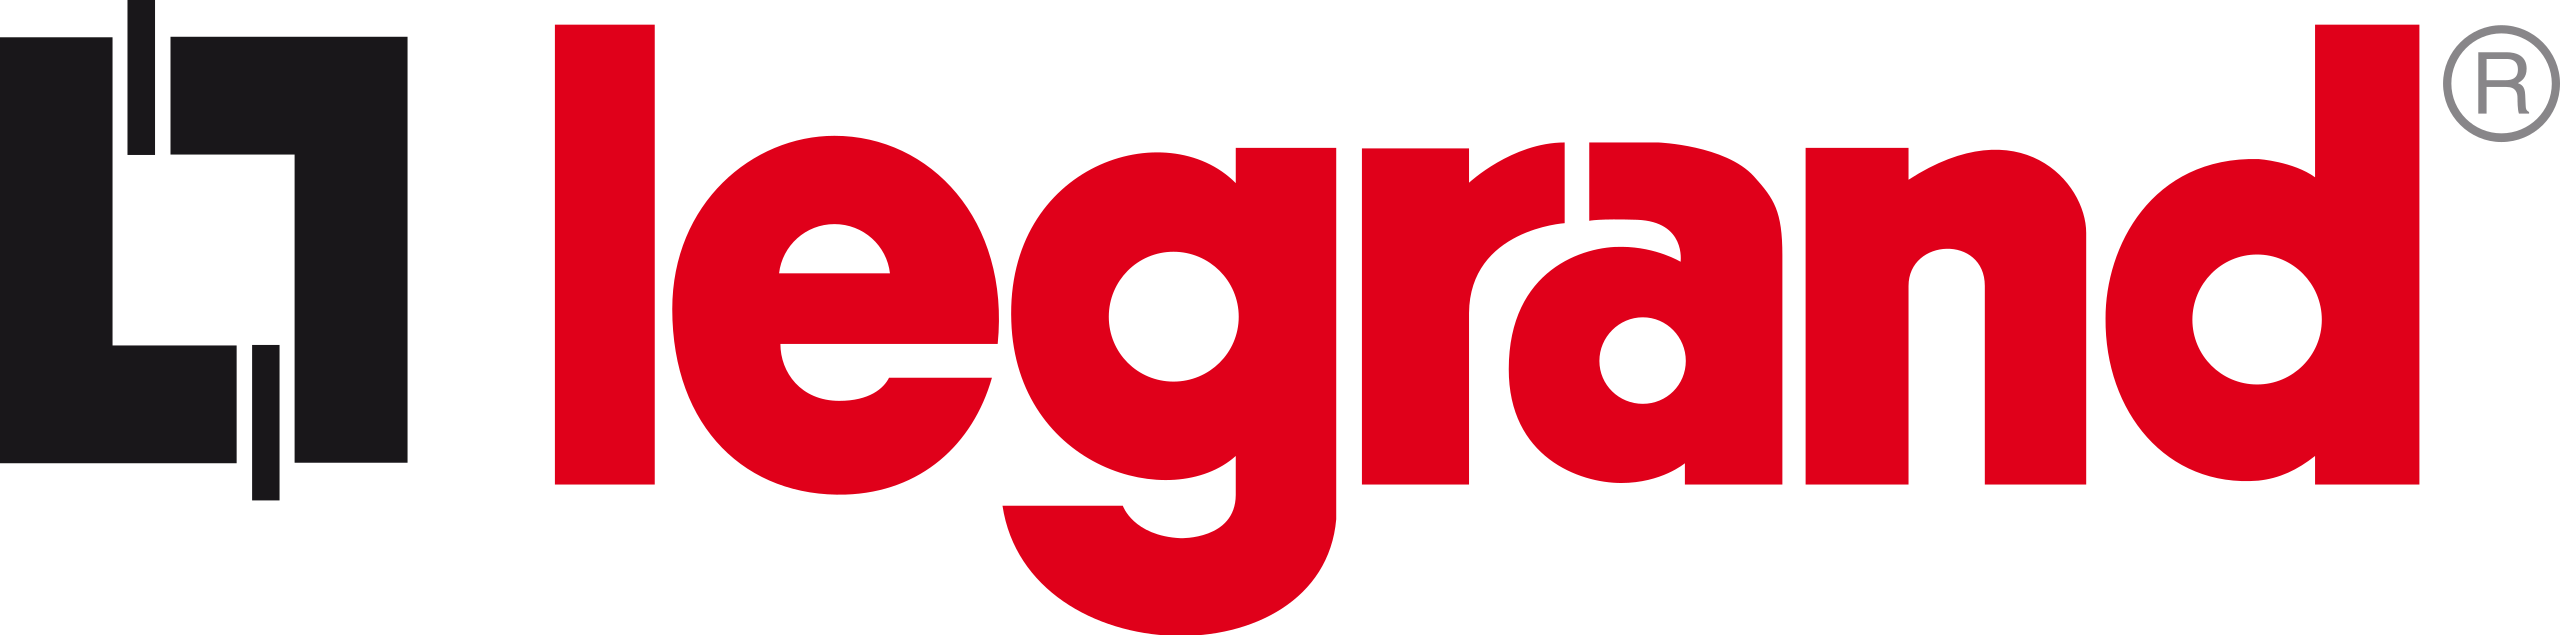 Logo-Legrand